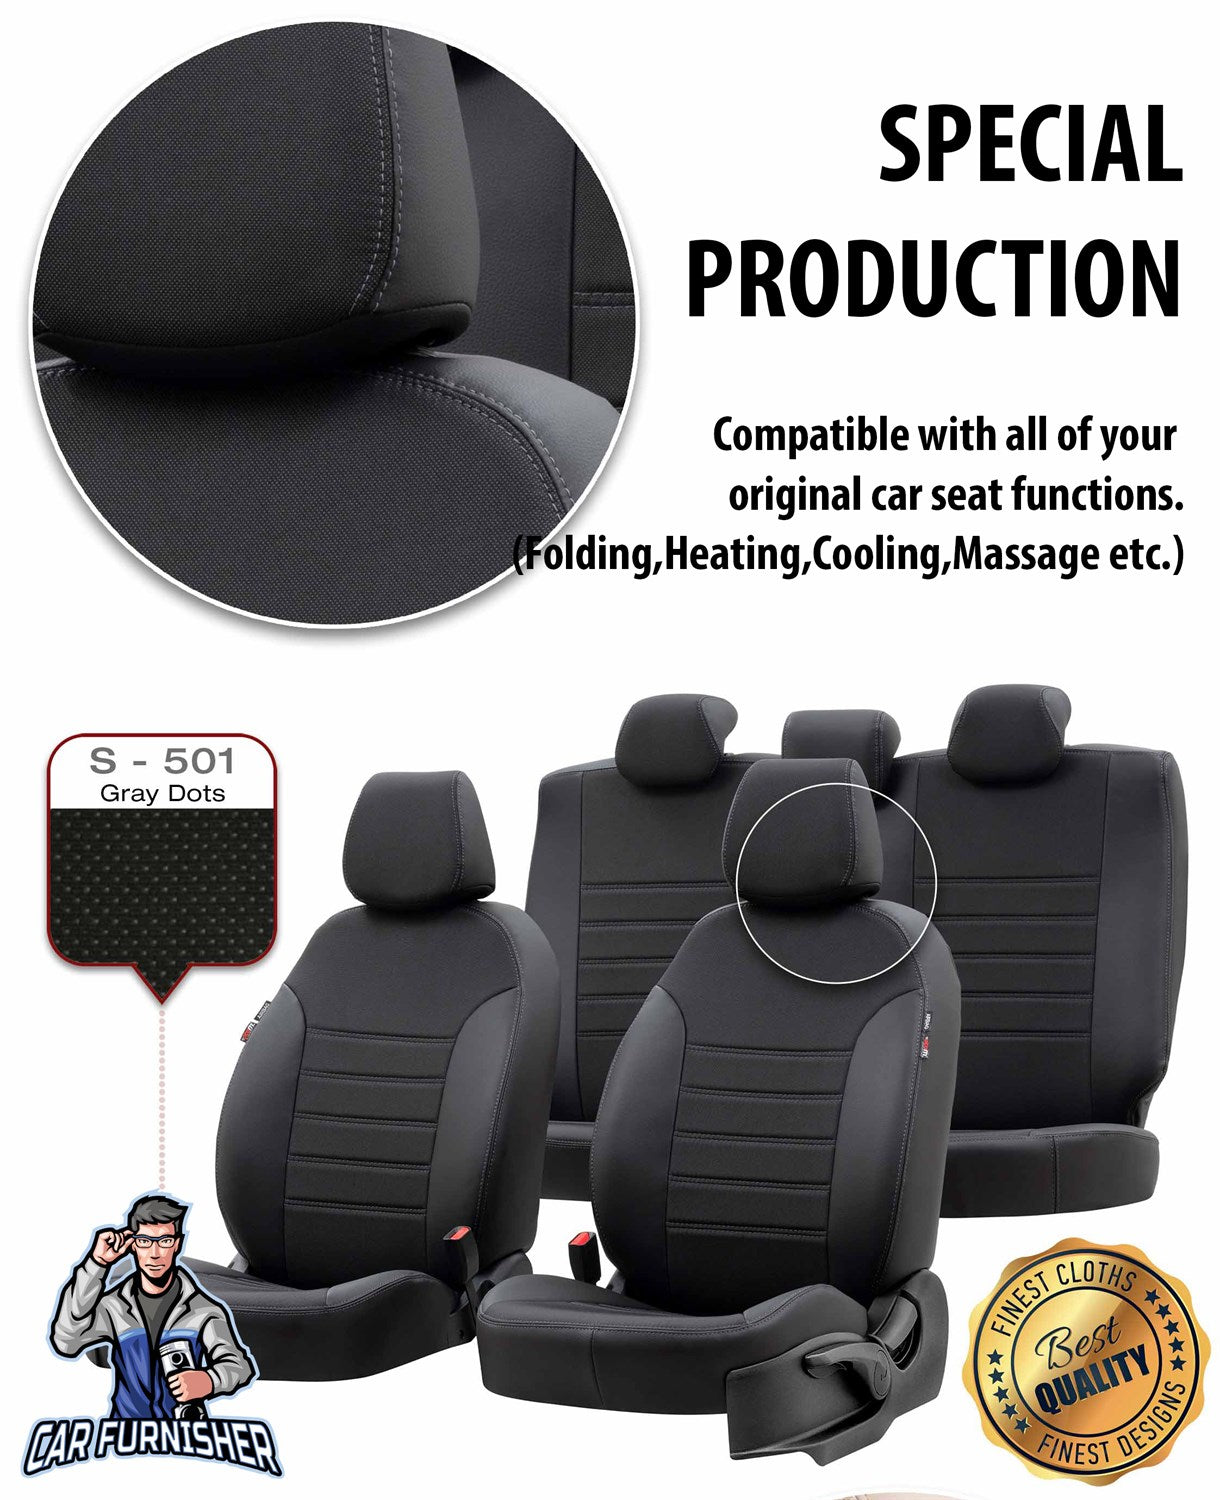 Fiat Tempra Seat Covers Paris Leather & Jacquard Design Dark Beige Leather & Jacquard Fabric